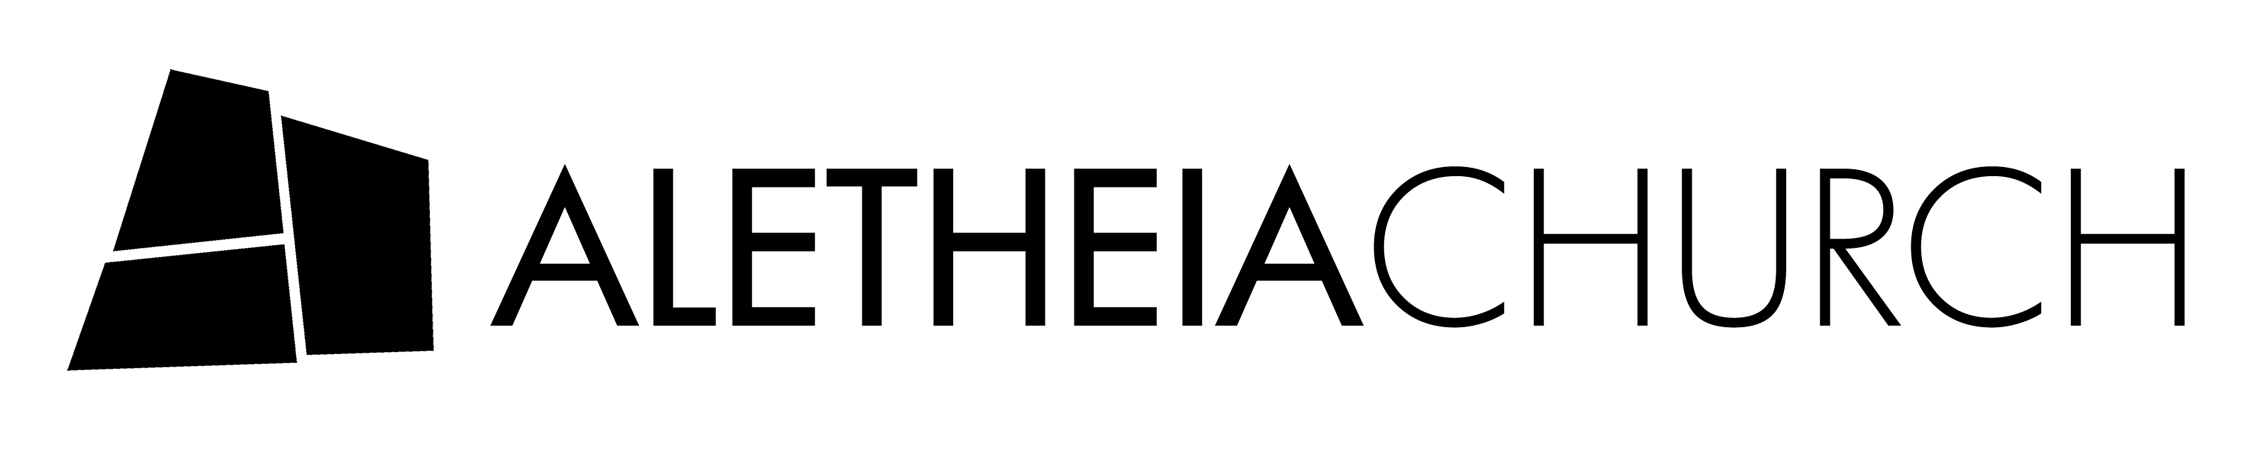 Logo and Name black